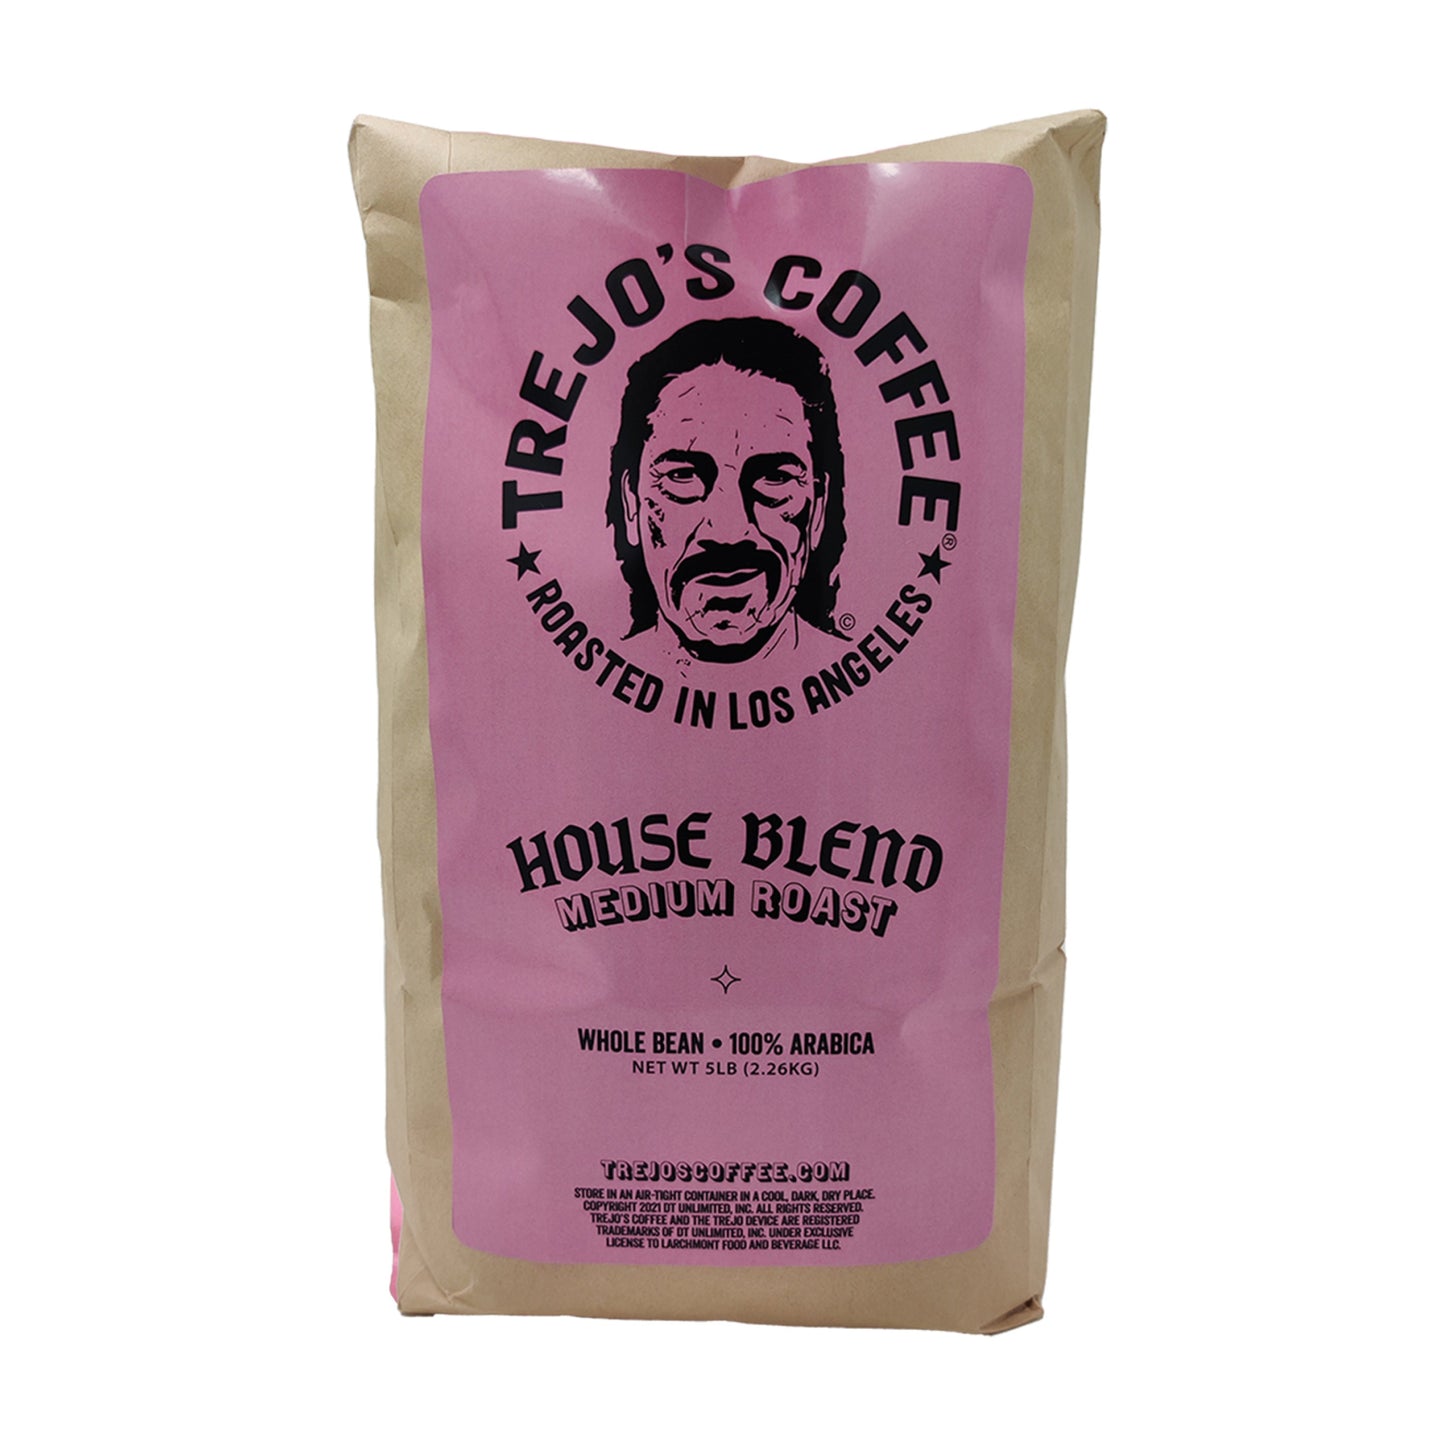 Trejo's Tacos - House Blend Whole Bean Coffee - Medium Roast - 12oz or 5lb